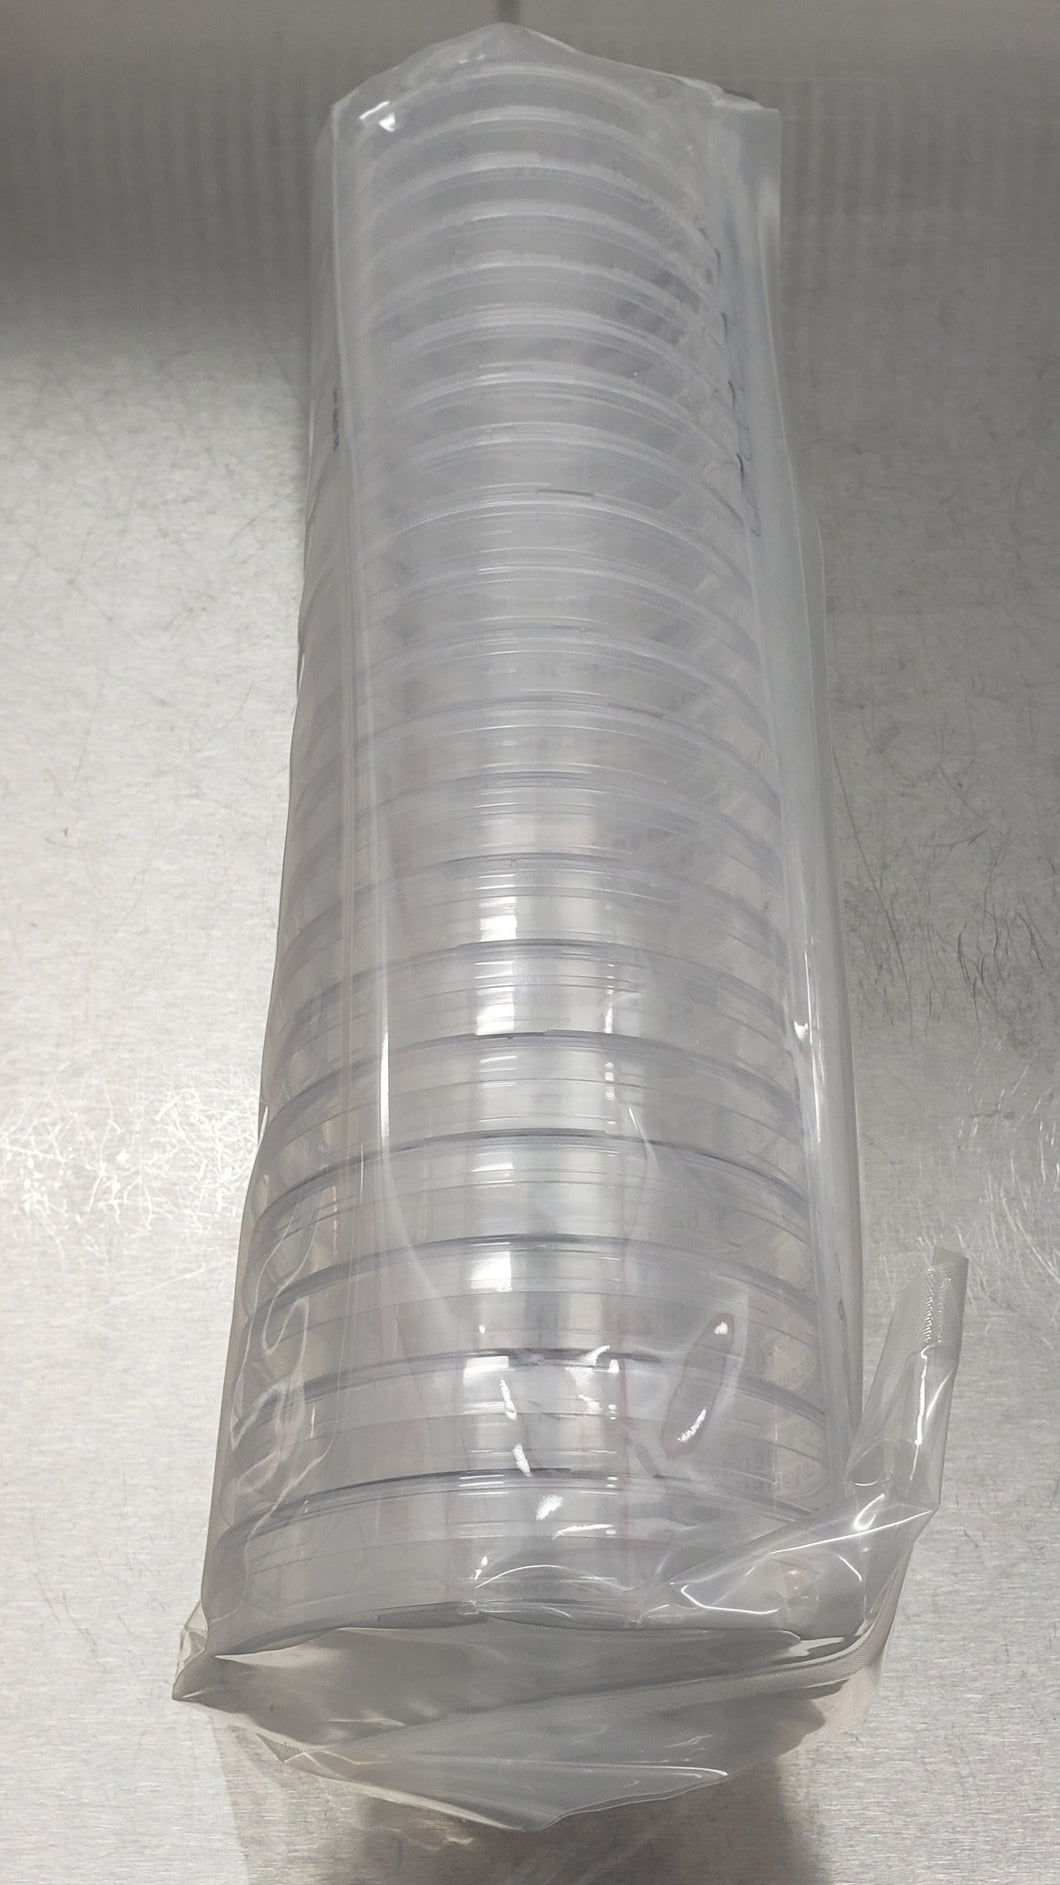 Petri Dishes (100mm x 15 mm) Sterile, 20/bag